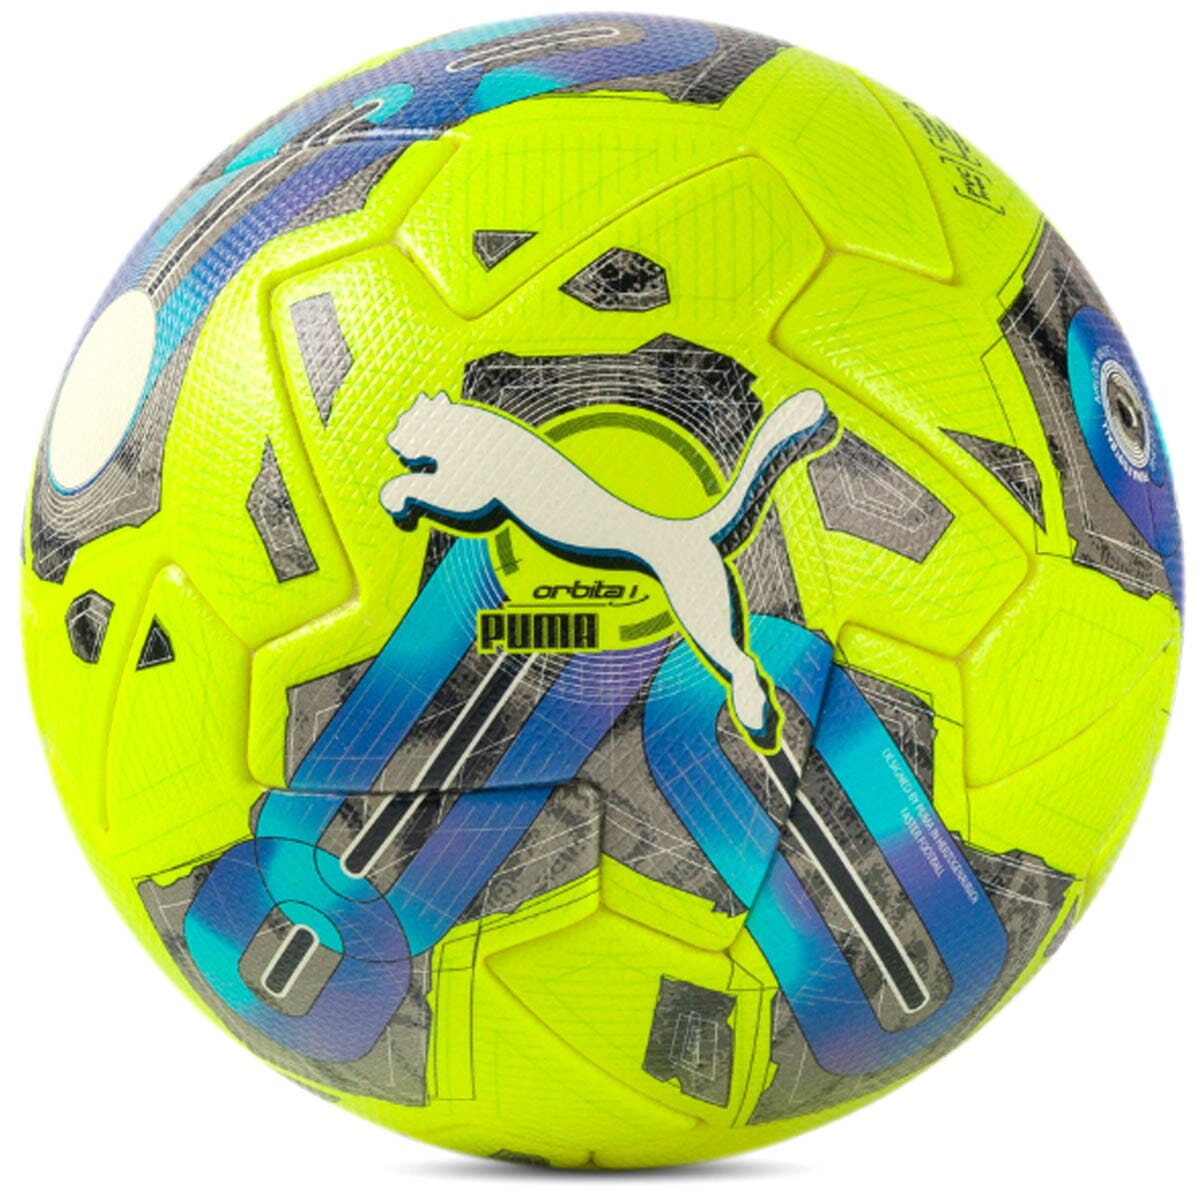 Puma Orbita 1 TB Fifa Quality Pro Ball | 08377402 Soccer Ball Puma 5 Yellow 